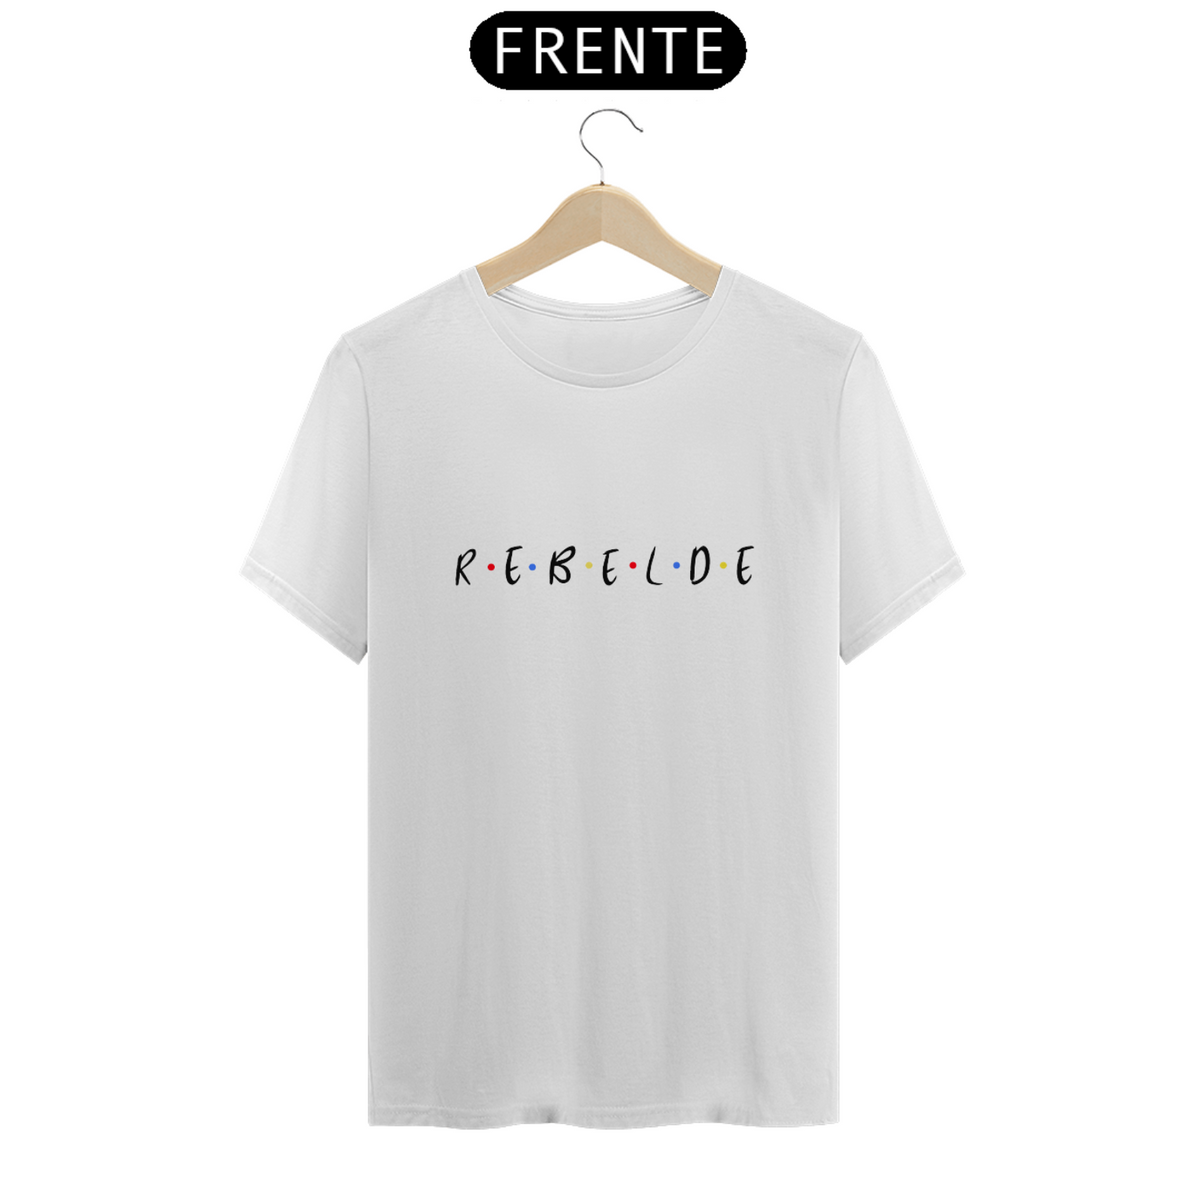 Nome do produto: Camiseta Unissex - Rebelde Friends